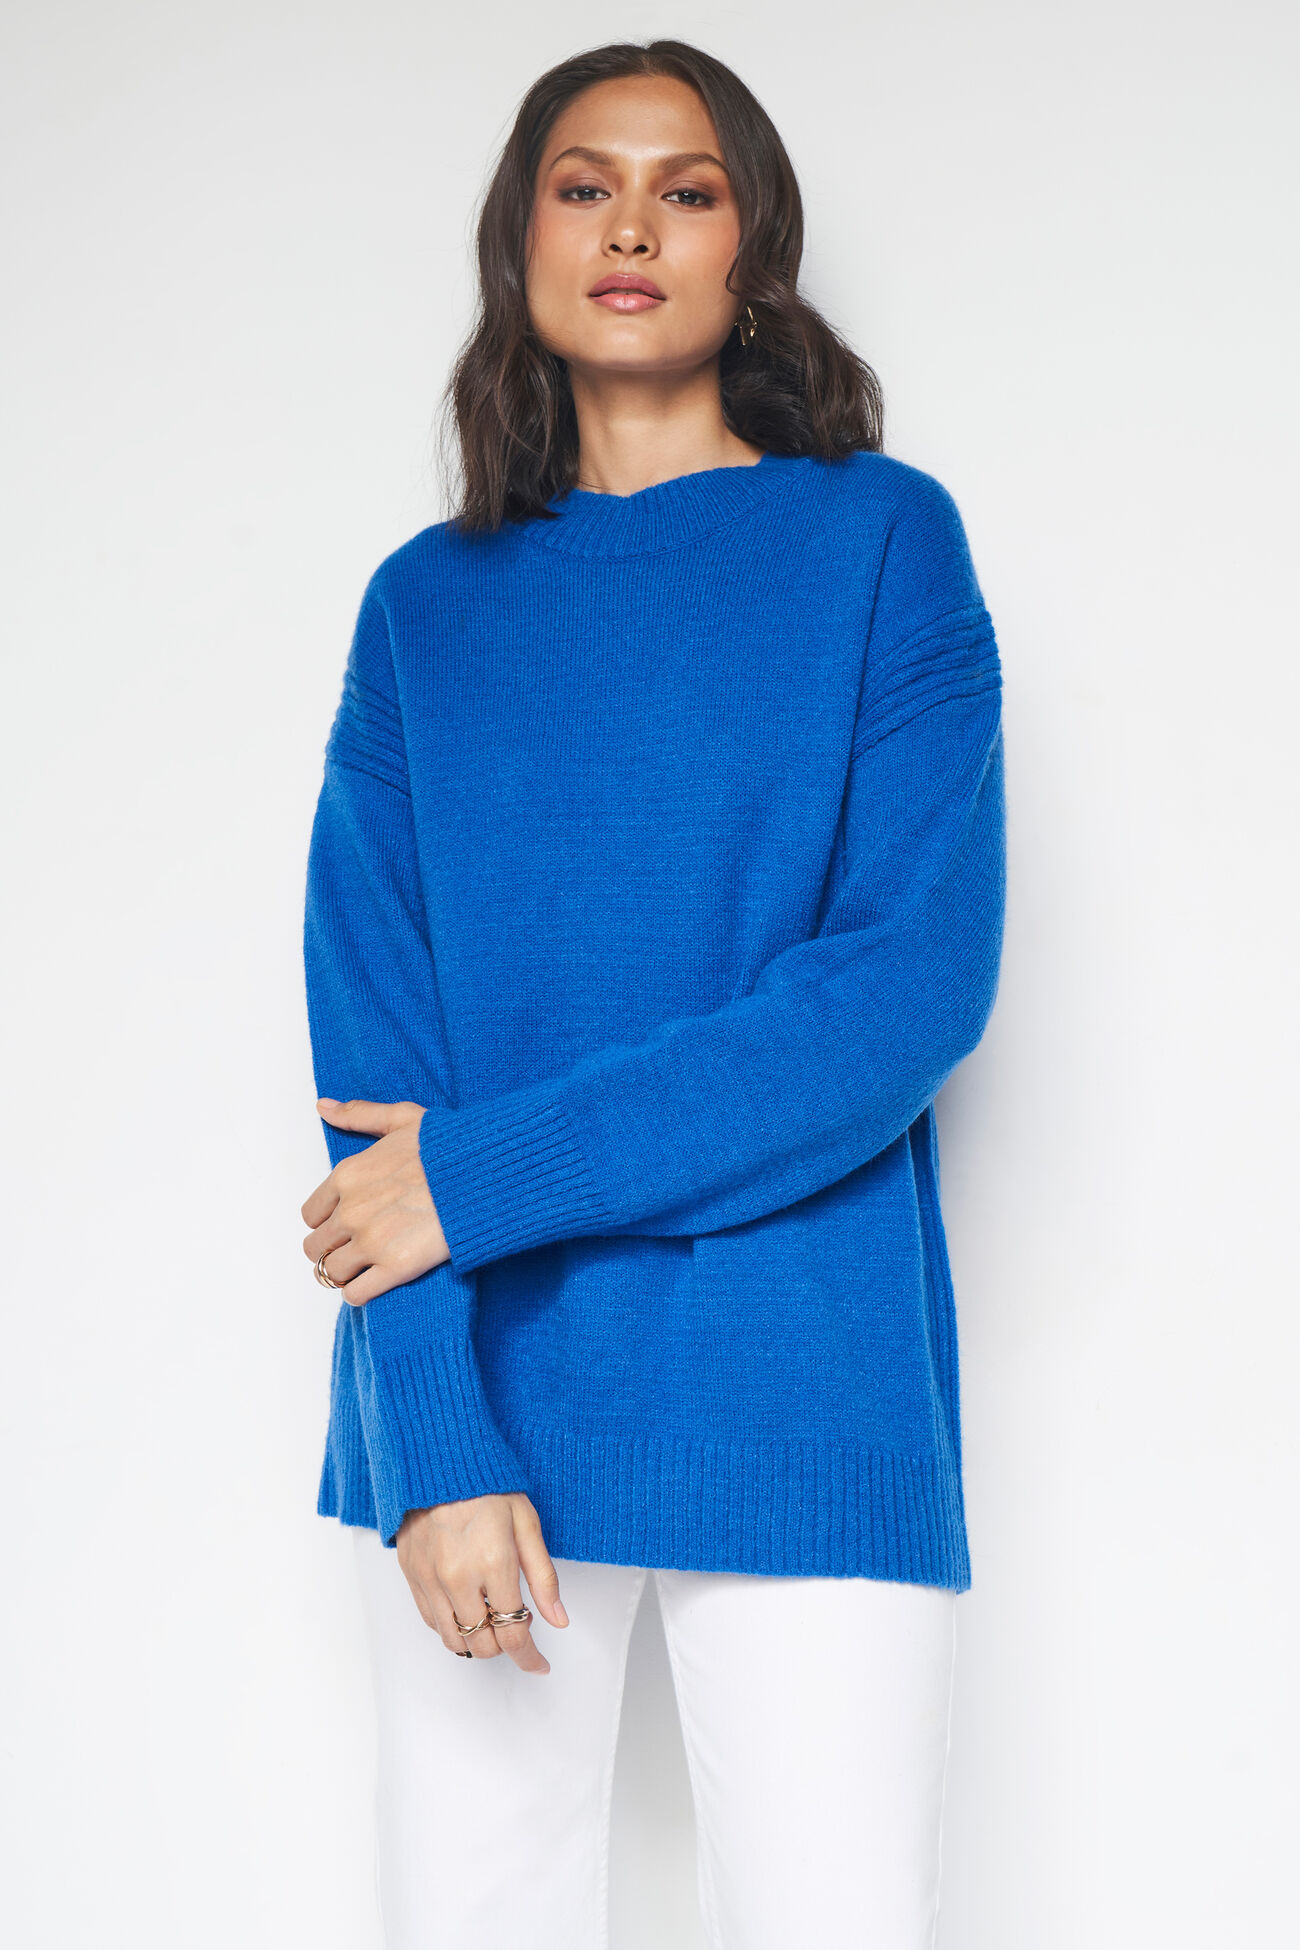 Aspen Over-Sized Sweater, Blue, image 4